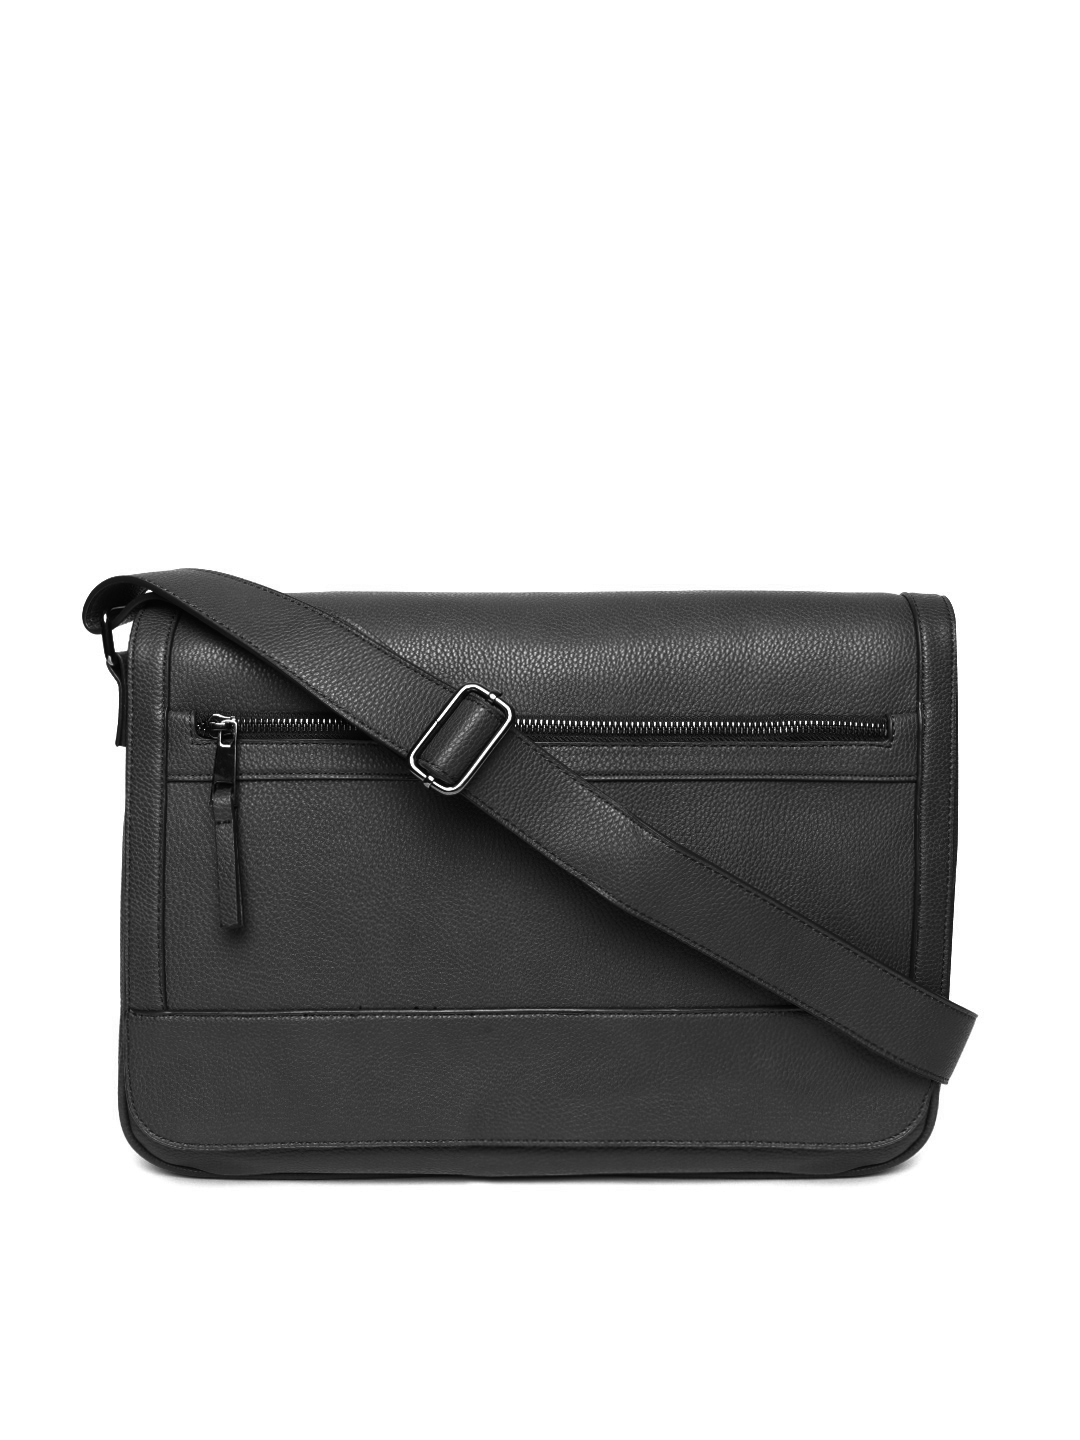 Buy ALDO Women Black Solid Leather Laptop Bag - Laptop Bag for Women ...